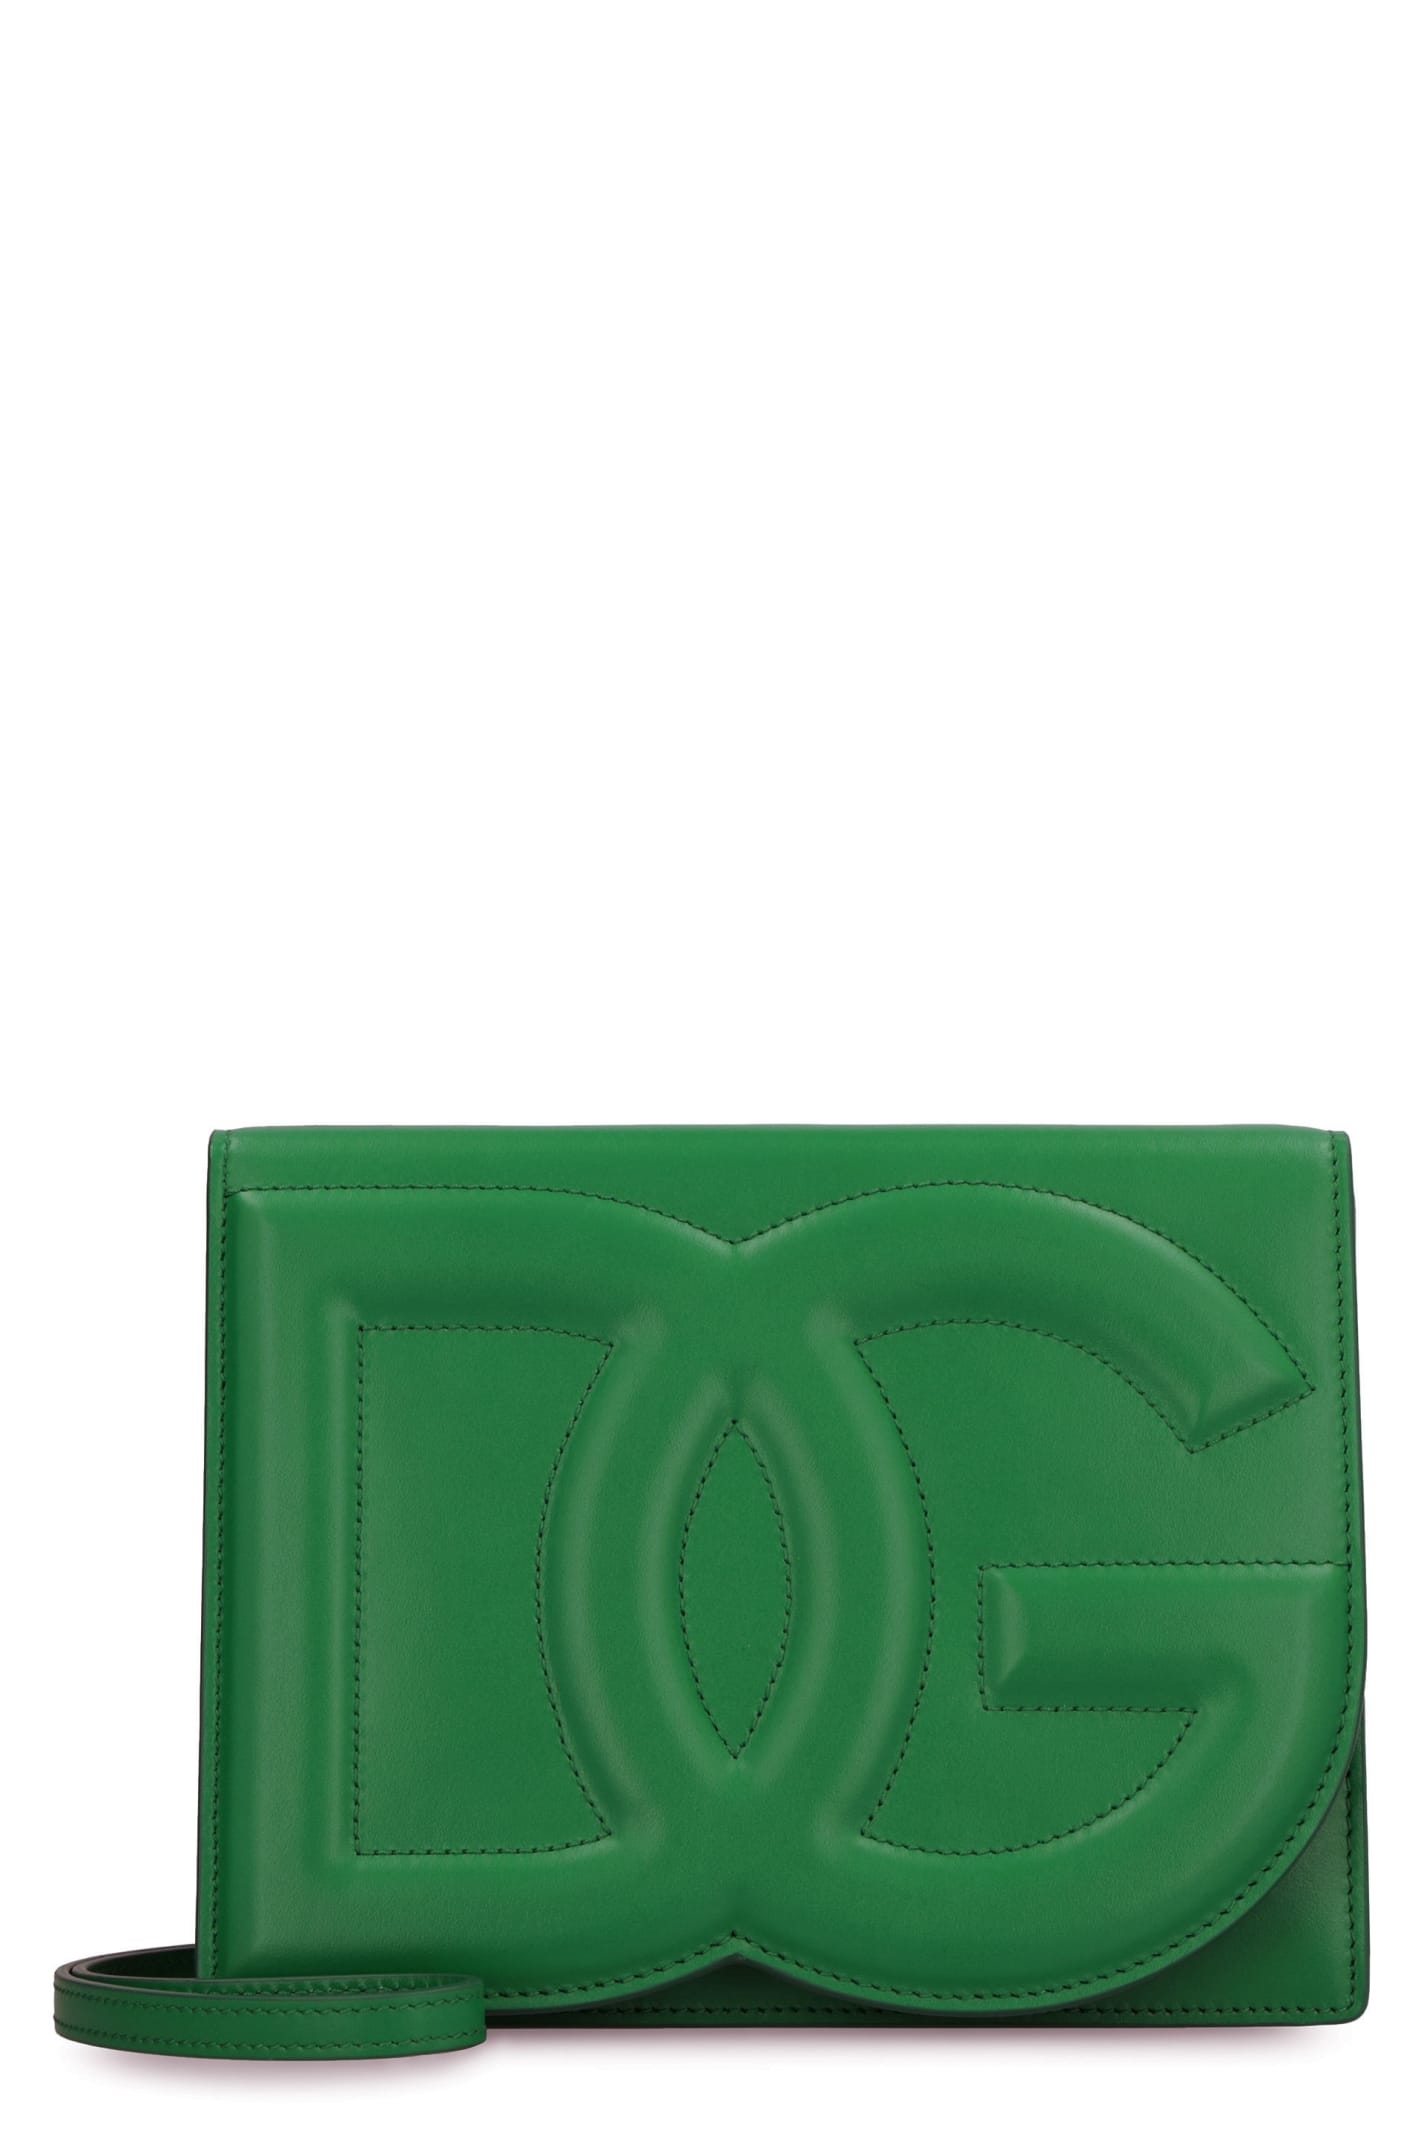 Dolce & Gabbana Dg Logo Leather Crossbody Bag